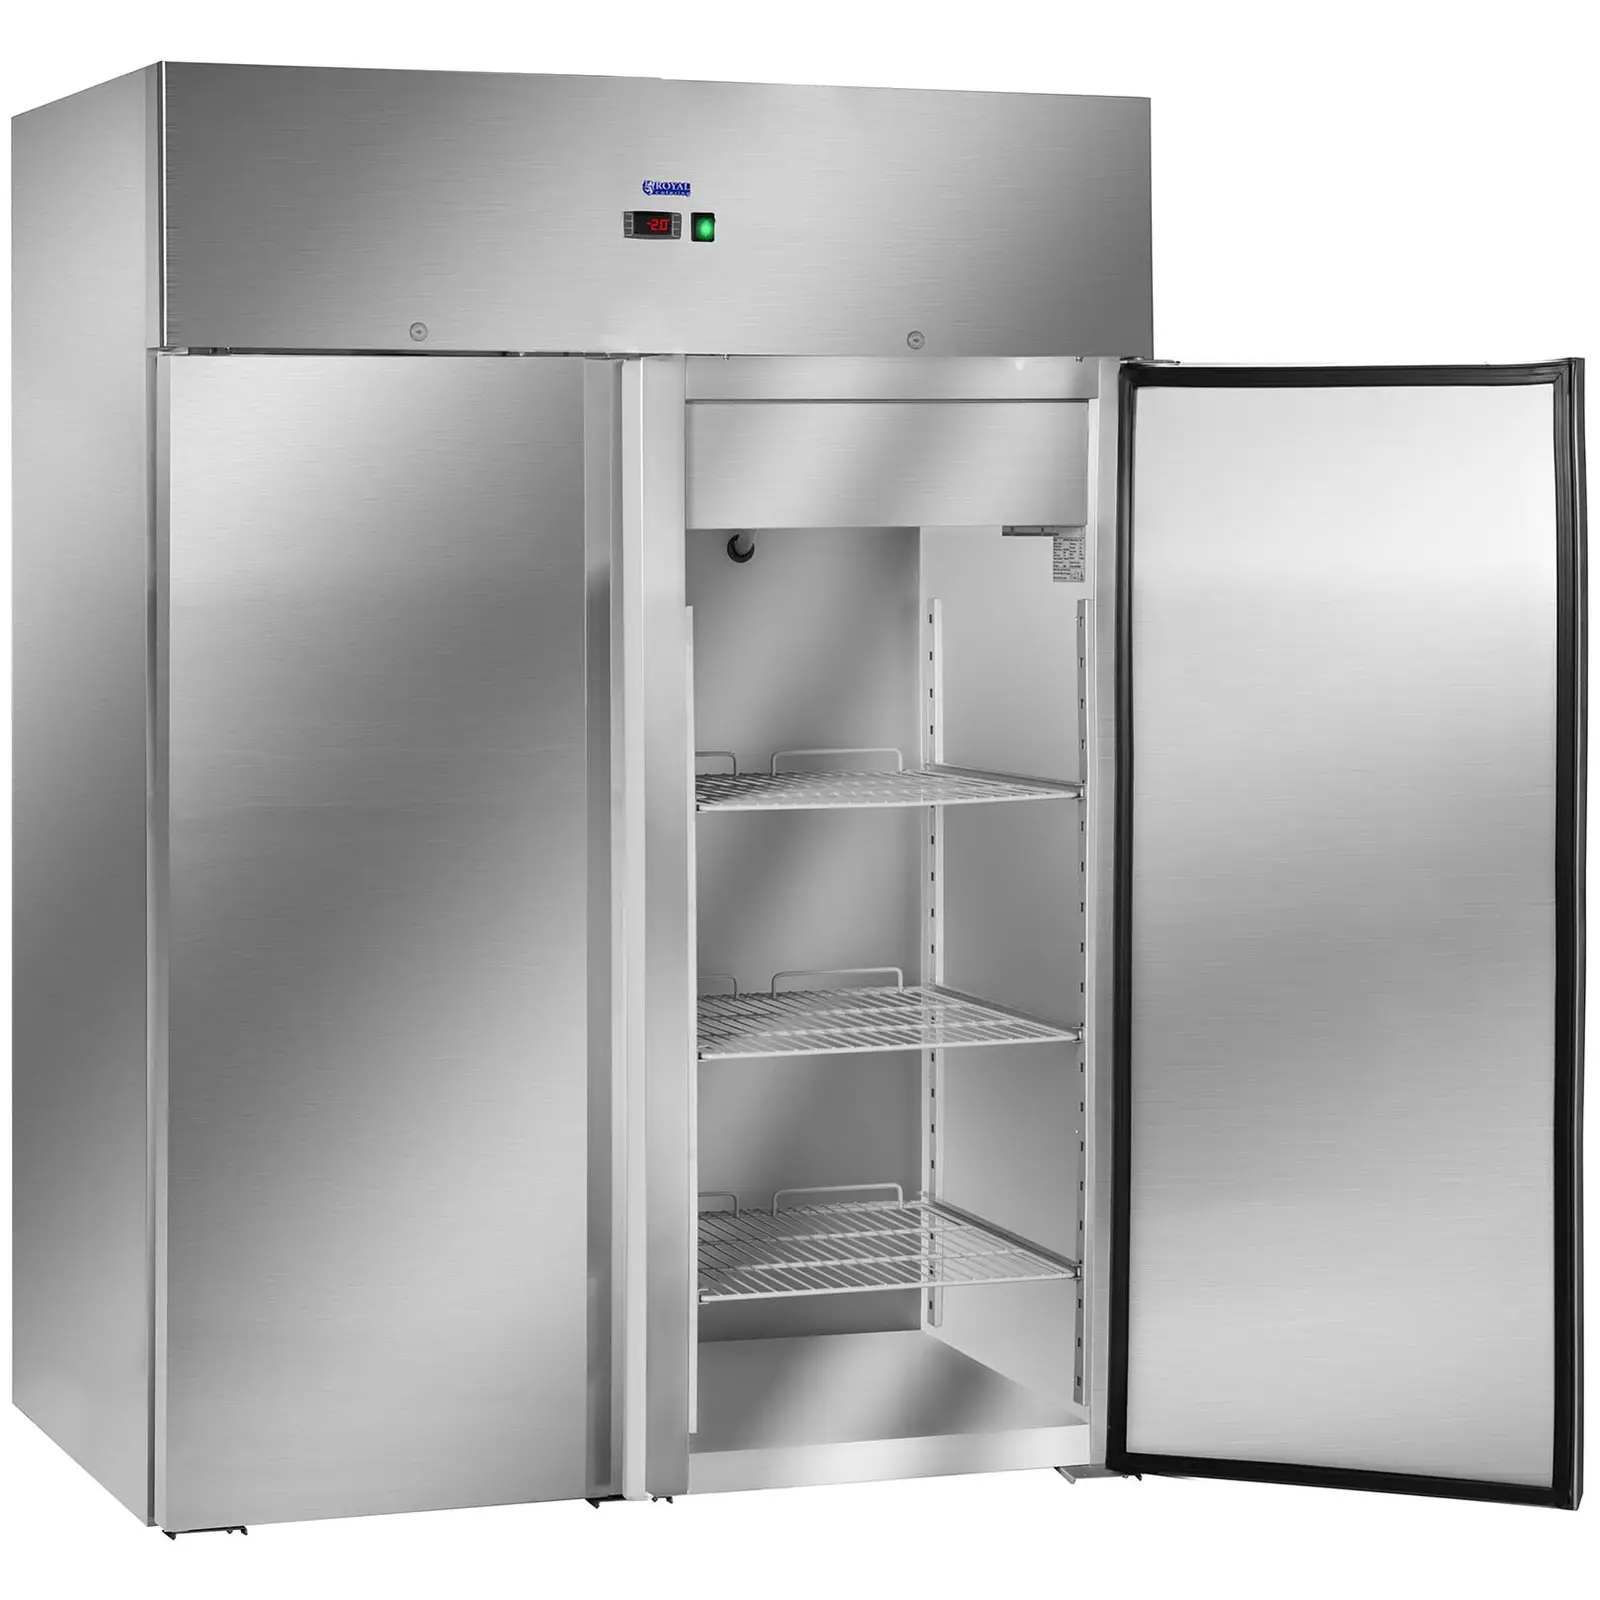 Šaldytuvas su dvejomis nerūdijančio plieno durimis - 1168 l